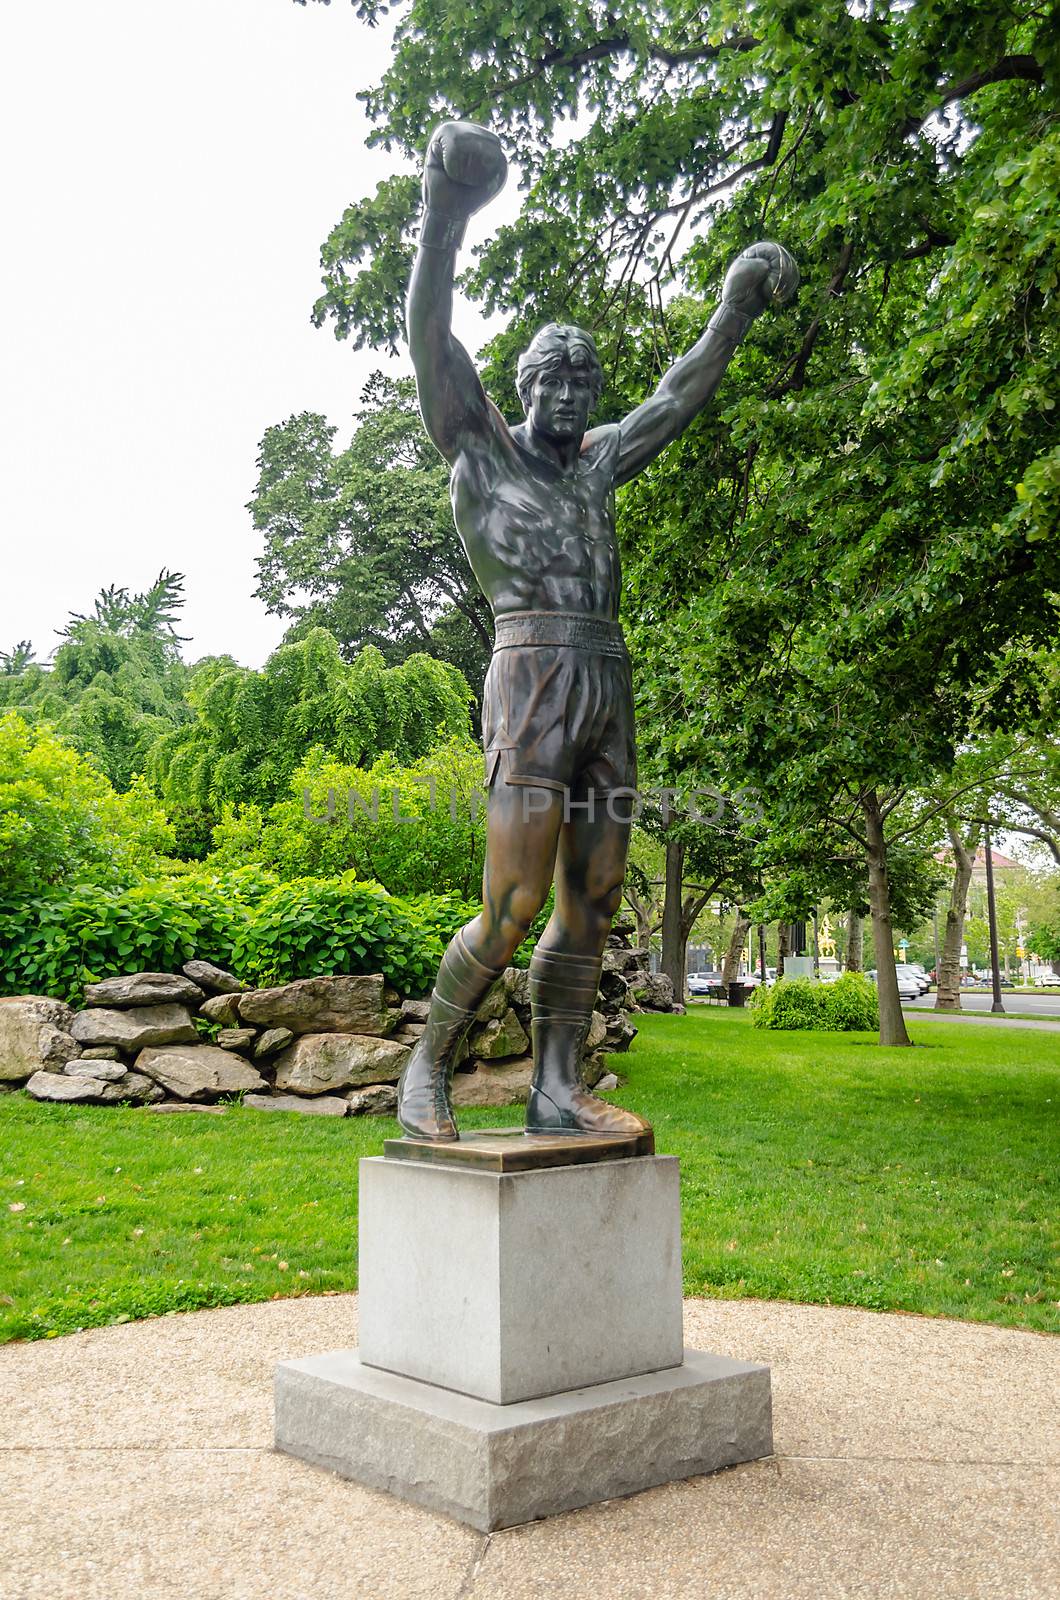 Rocky Statue in Philadelphia by marcorubino